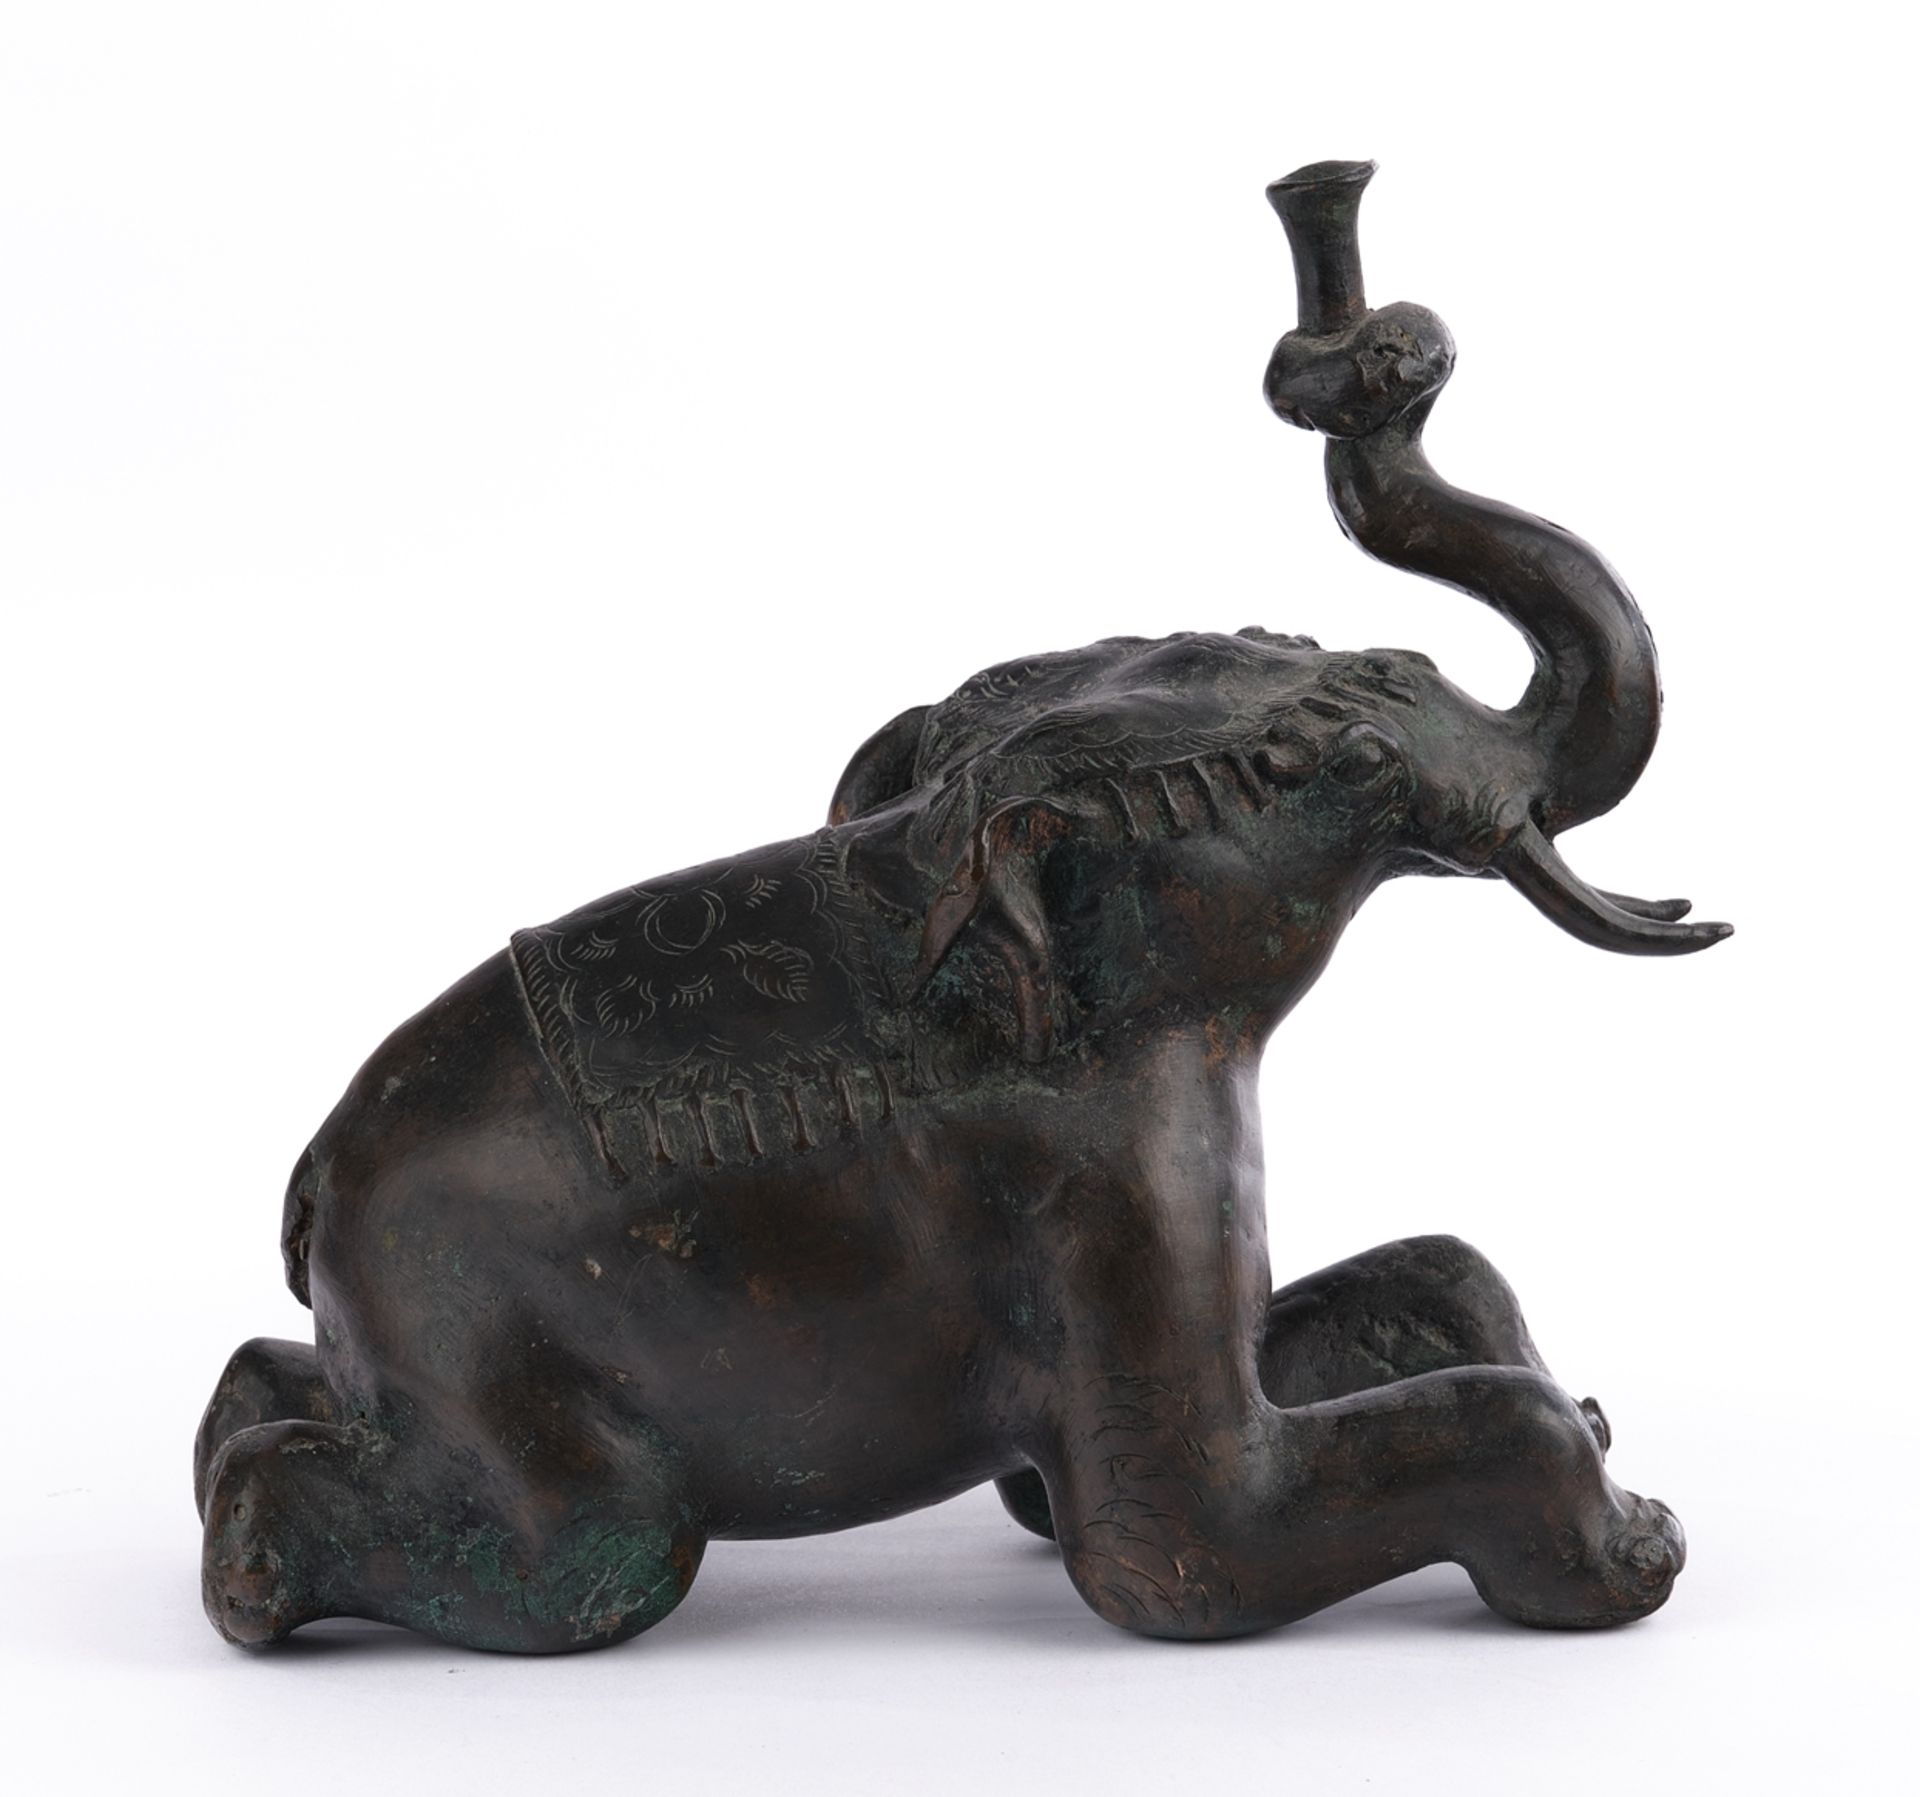 Sculpture, , "Reclining elephant", India, 20th/21st century, metal, dark patina, 22 cm high